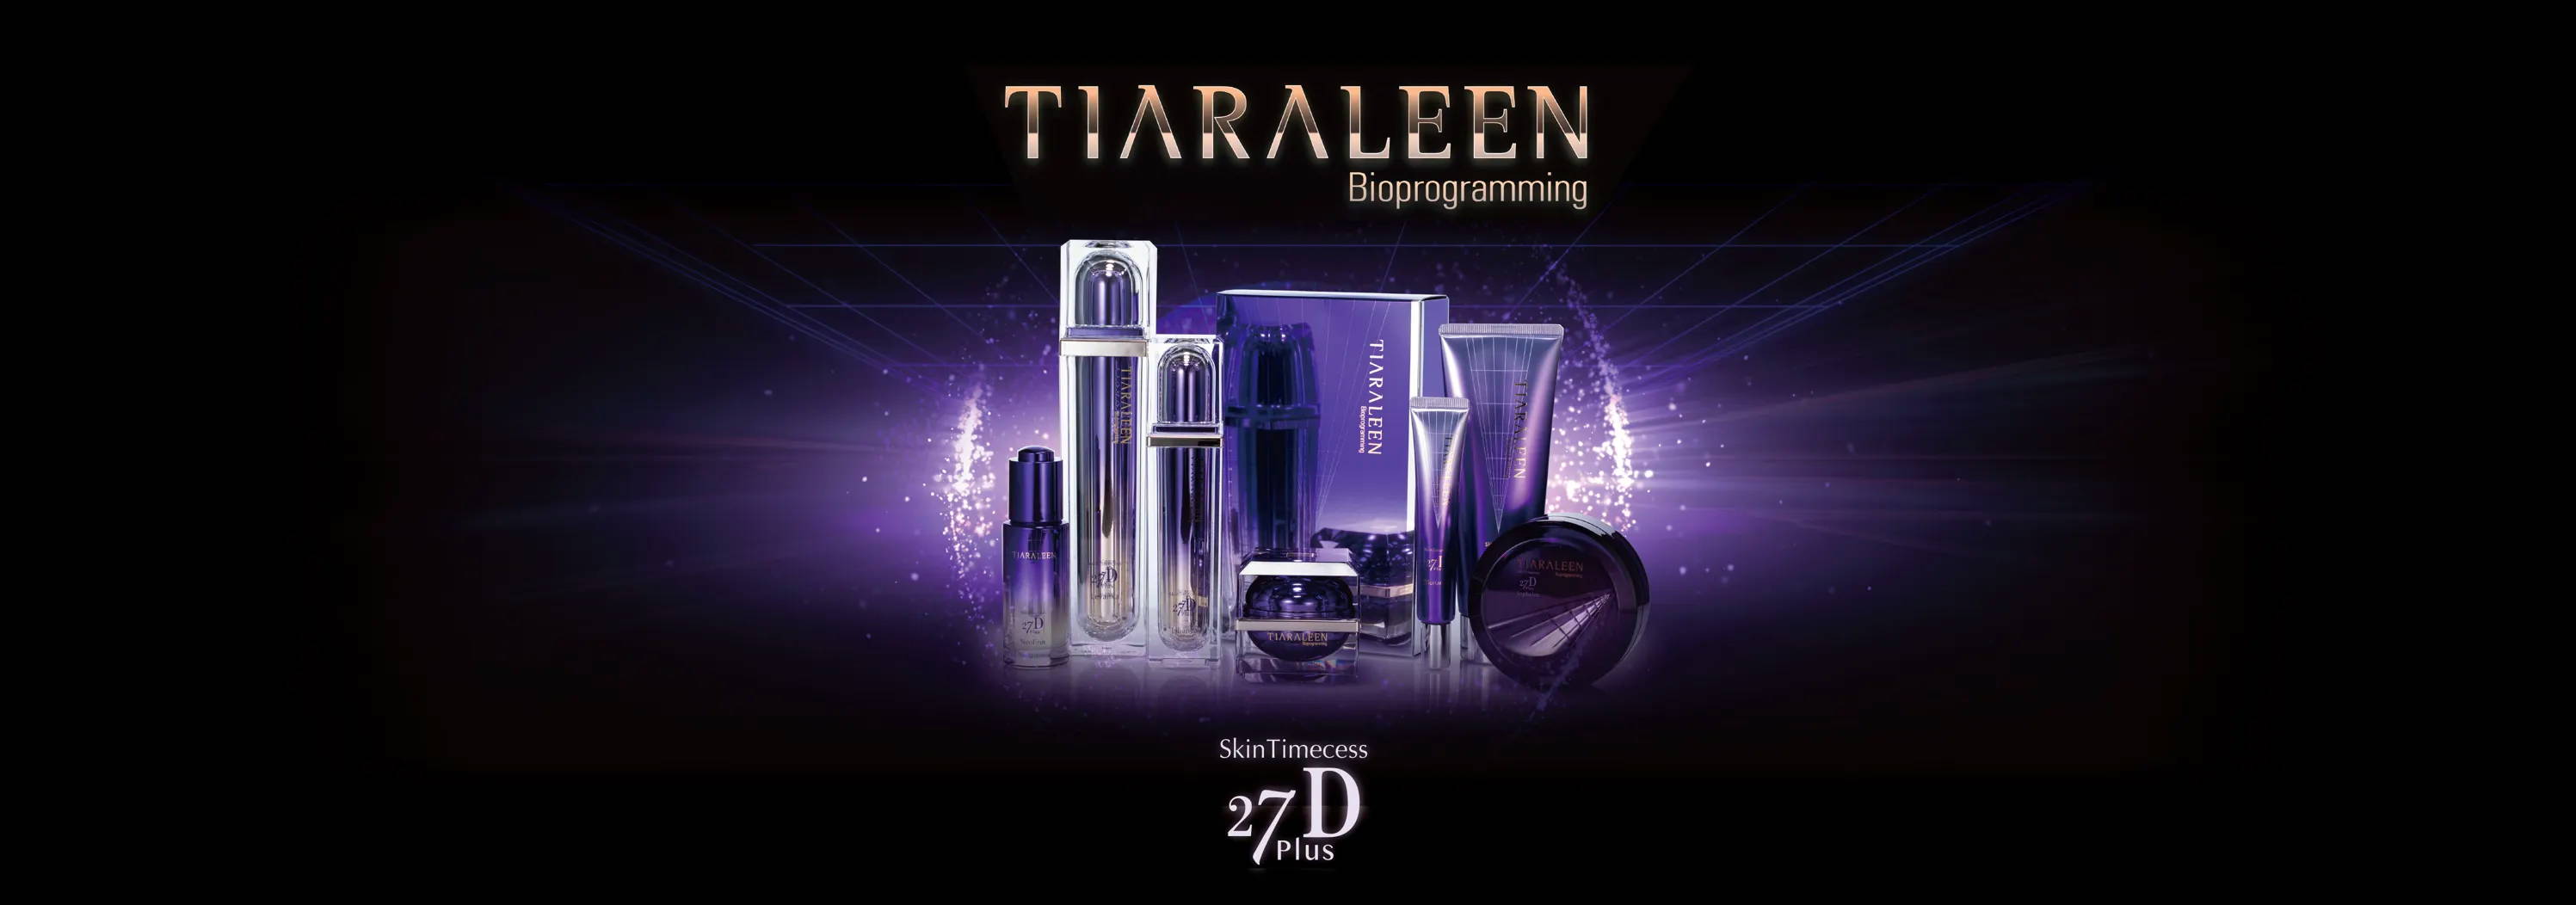 Tiaraleen SkinTimecess 27D Plus